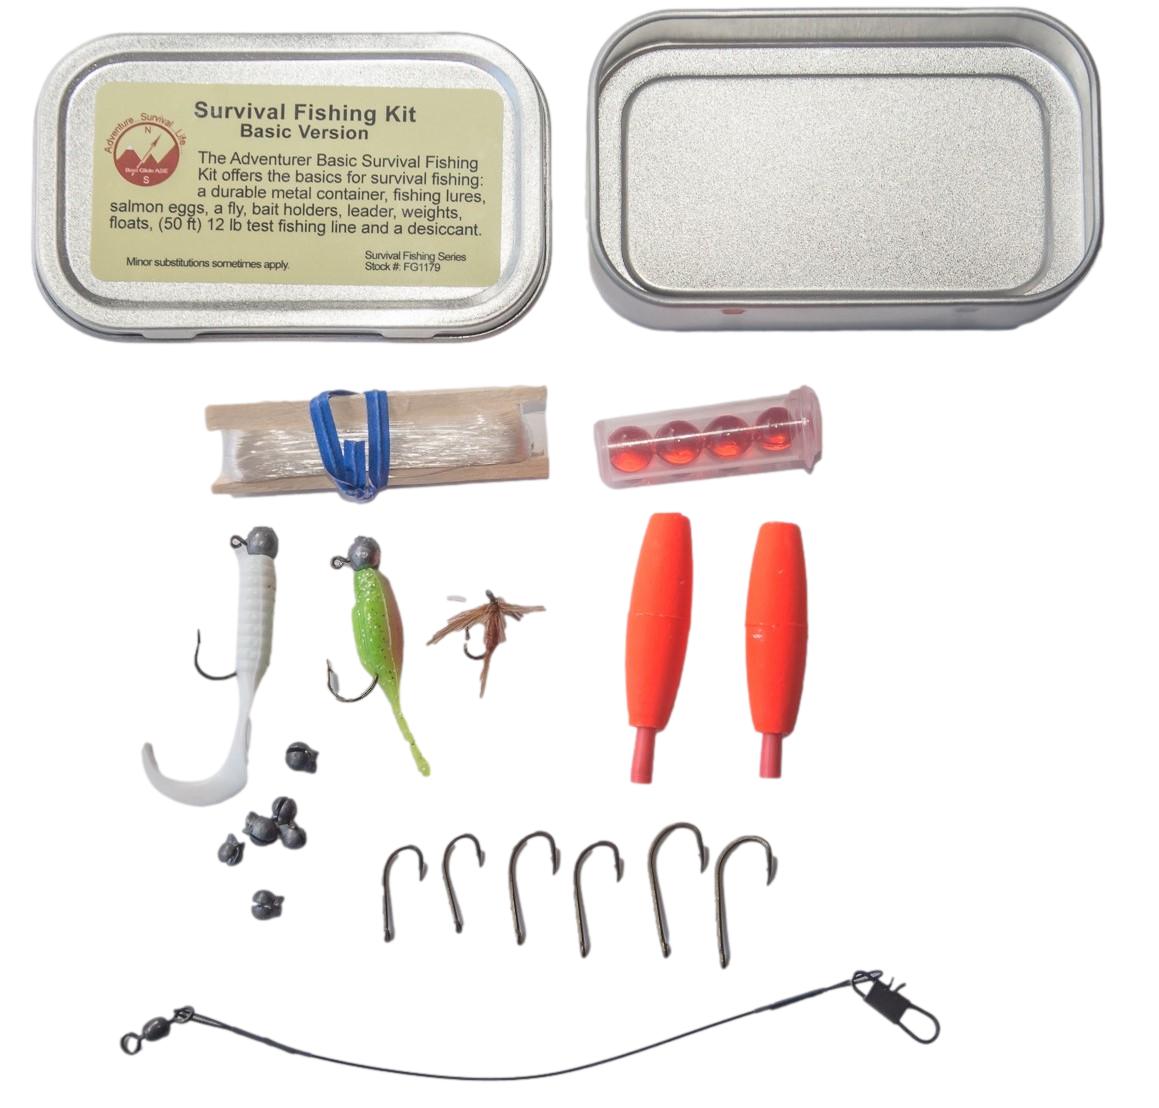 Emergency Kit Basics - Survival Kit Series